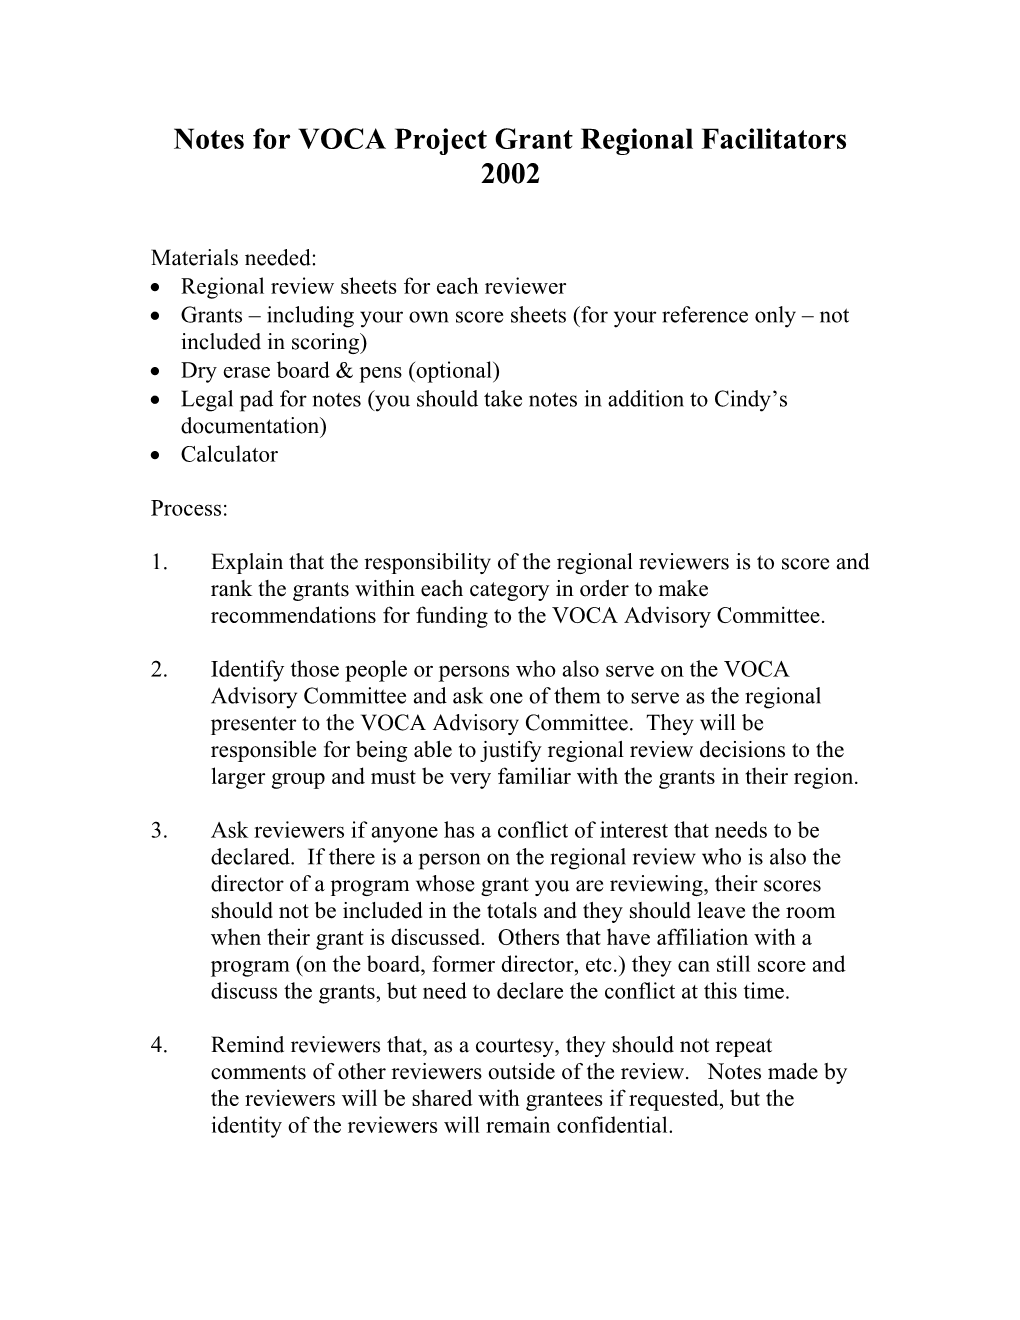 Notes for 2002 VOCA Regional Review Facilitators